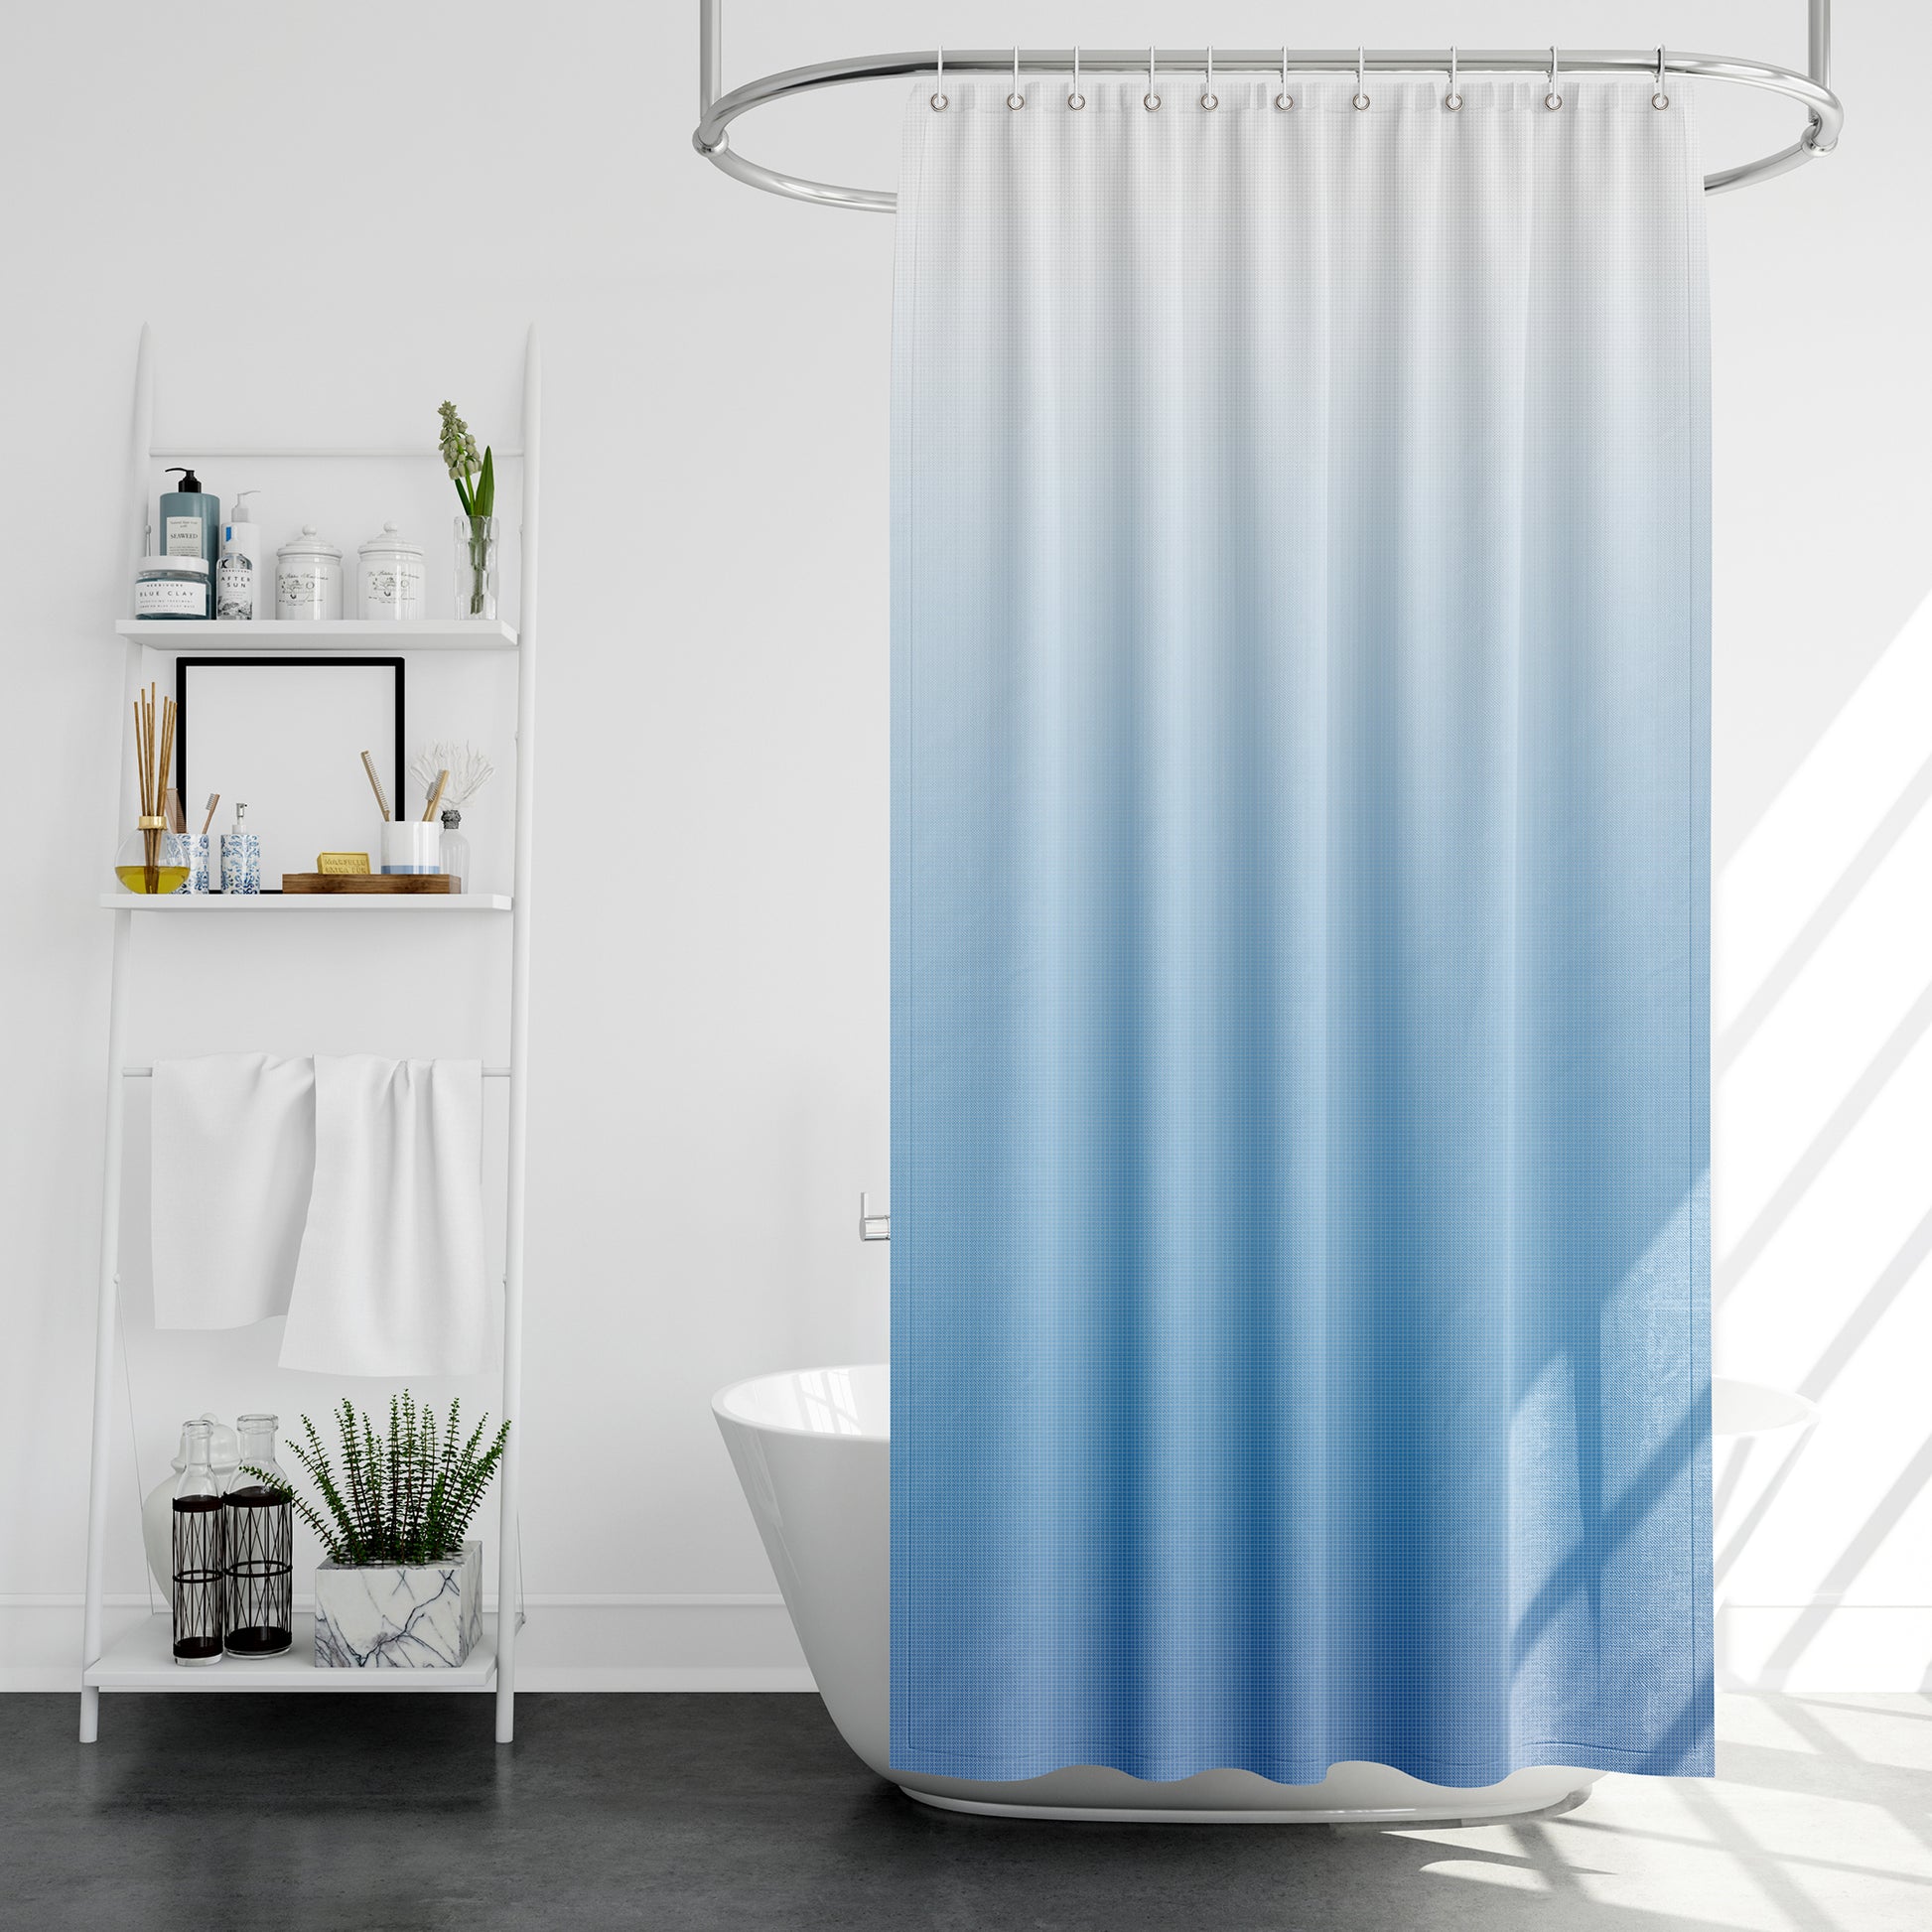 Bath curtains waterproof,